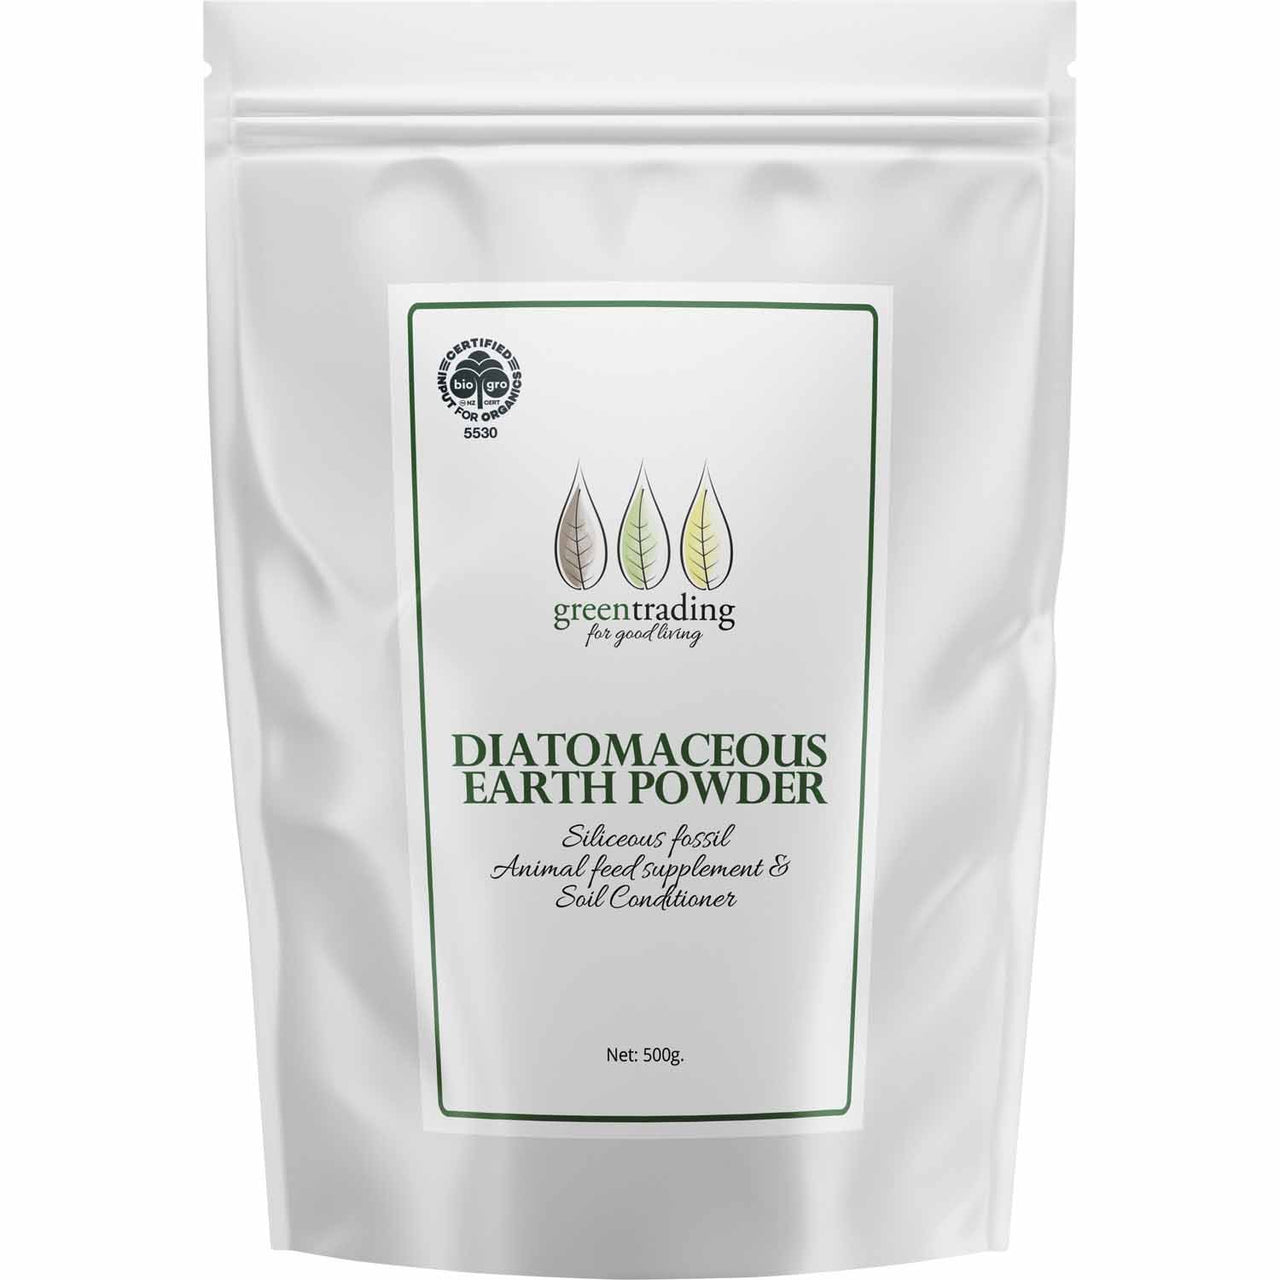 Green Trading - Diatomaceous Earth Powder - [500g]